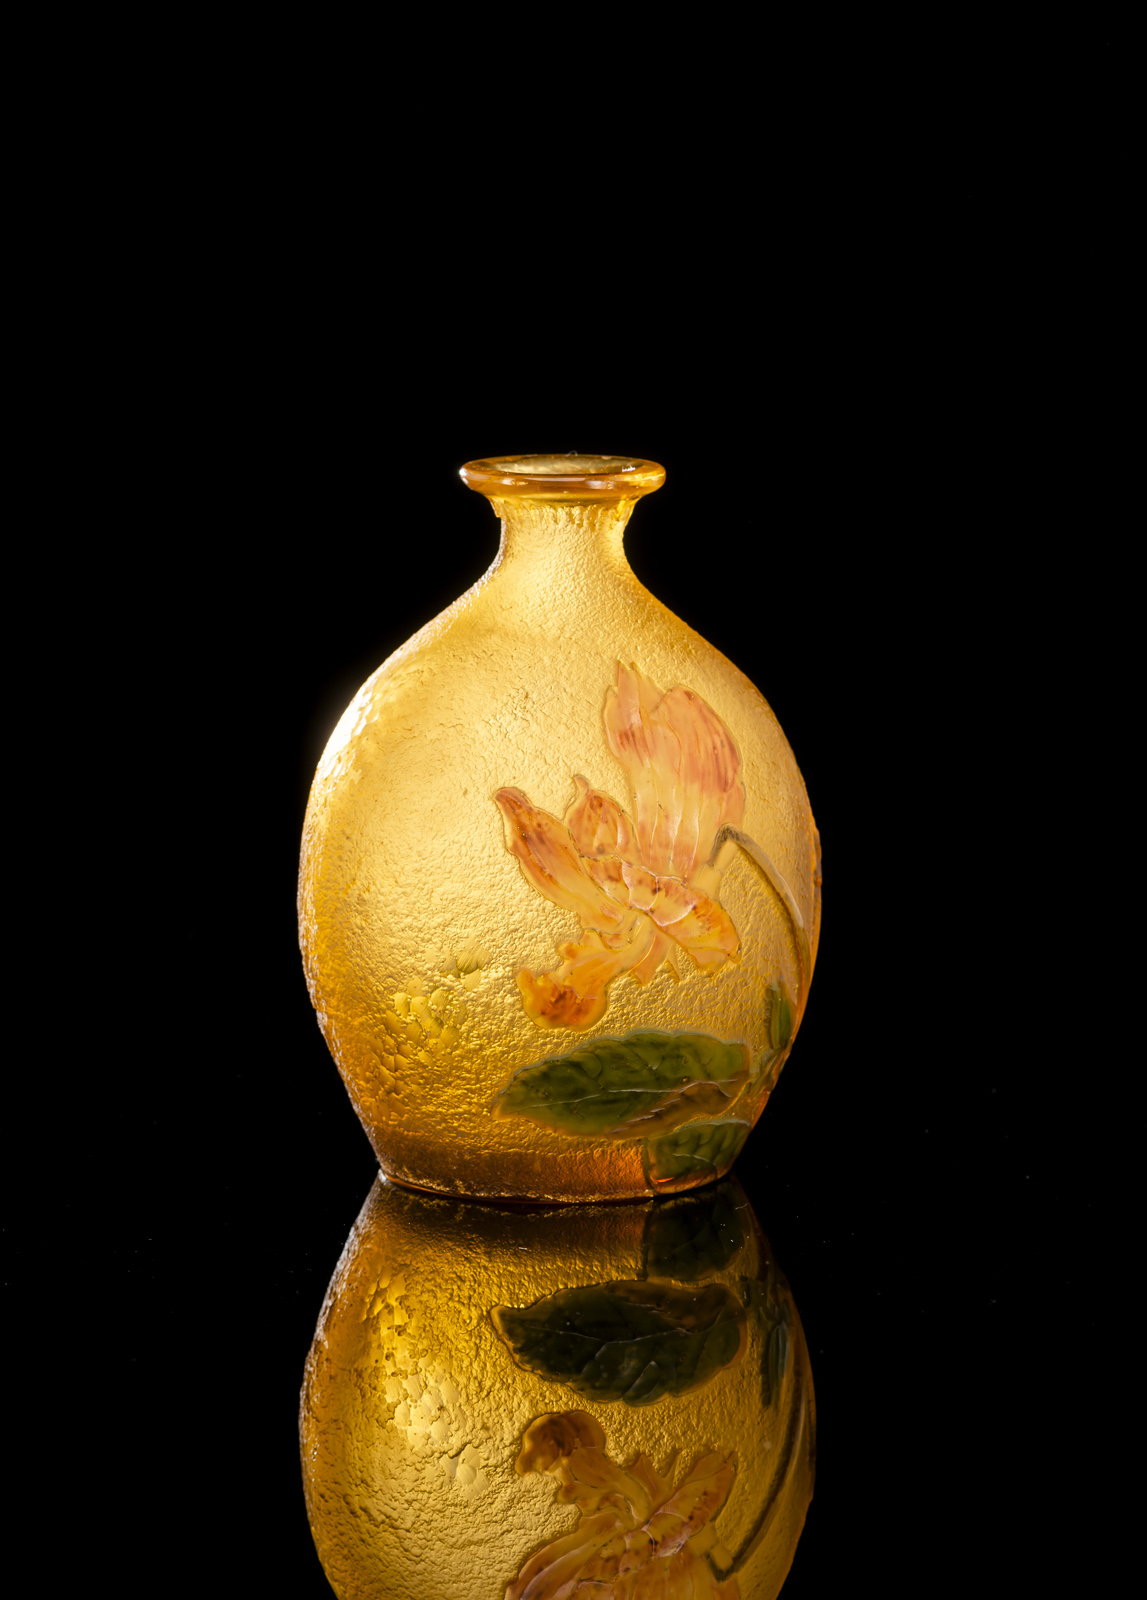 A BURGUN SCHWERER & CO FLOWER CAMEO GLASS VASE - Image 2 of 3